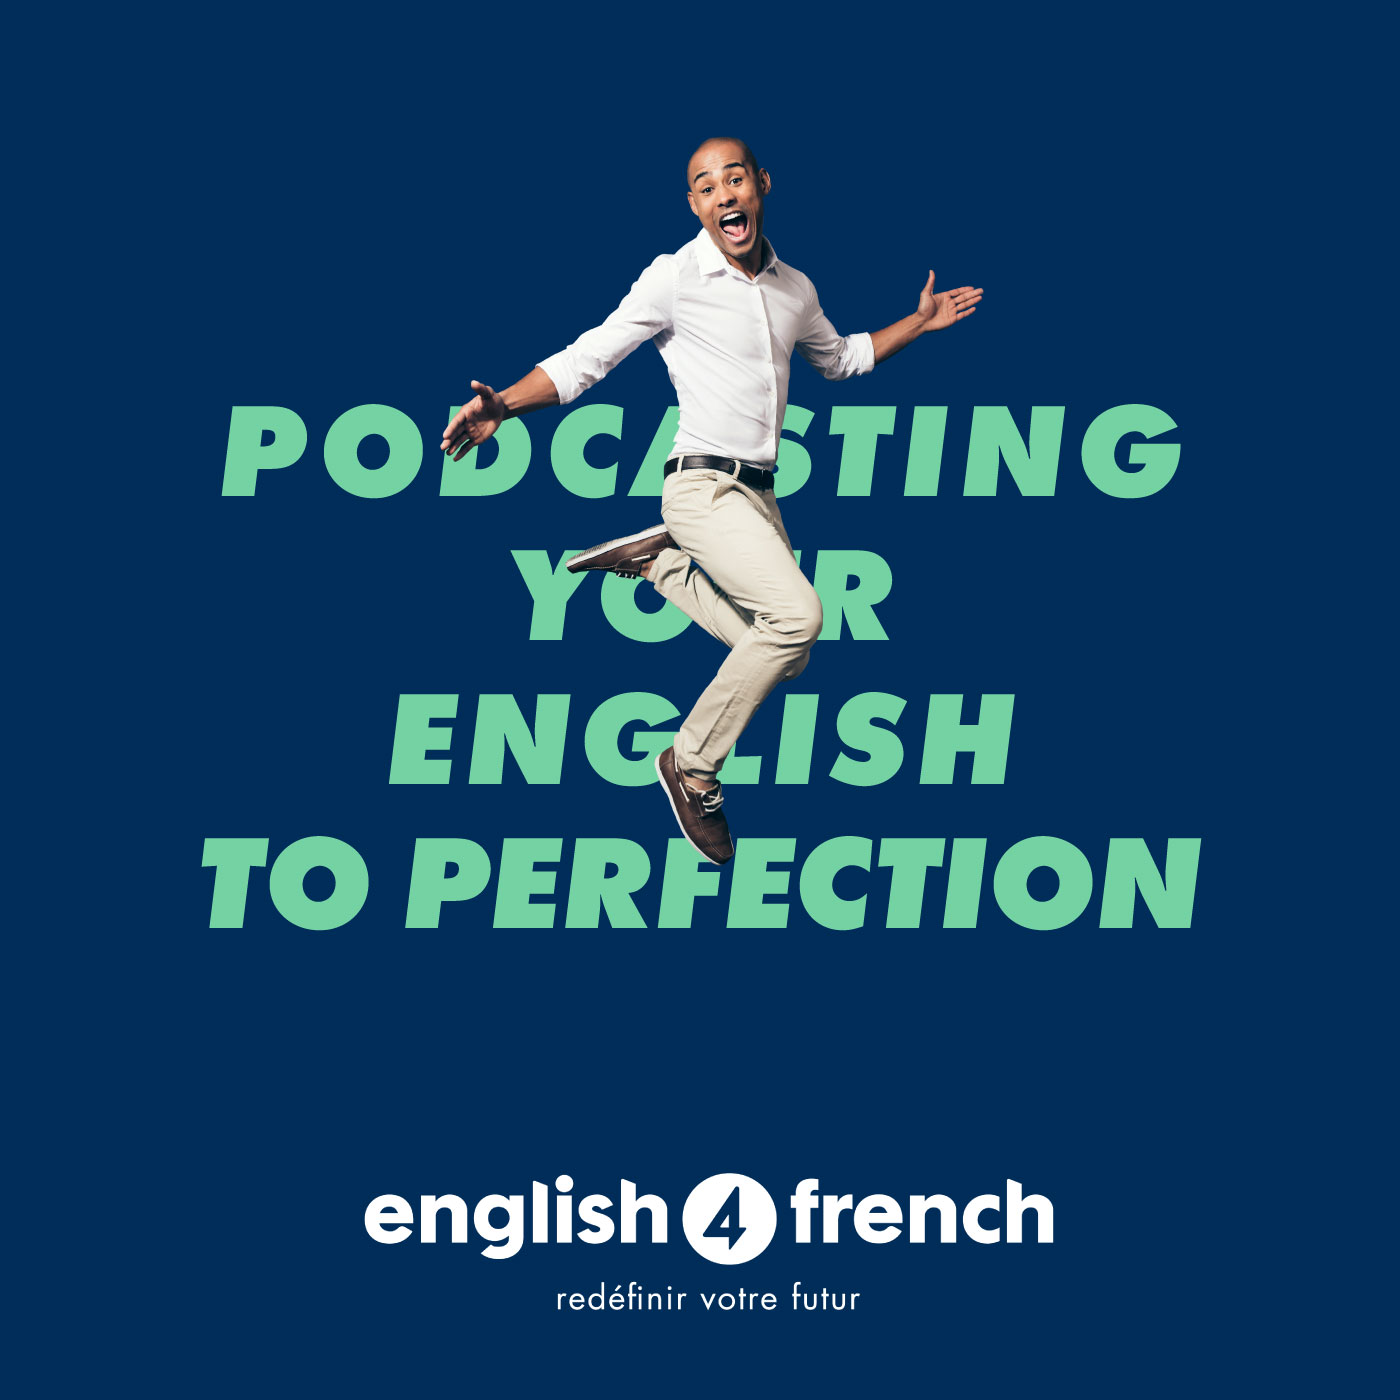 English 4 French